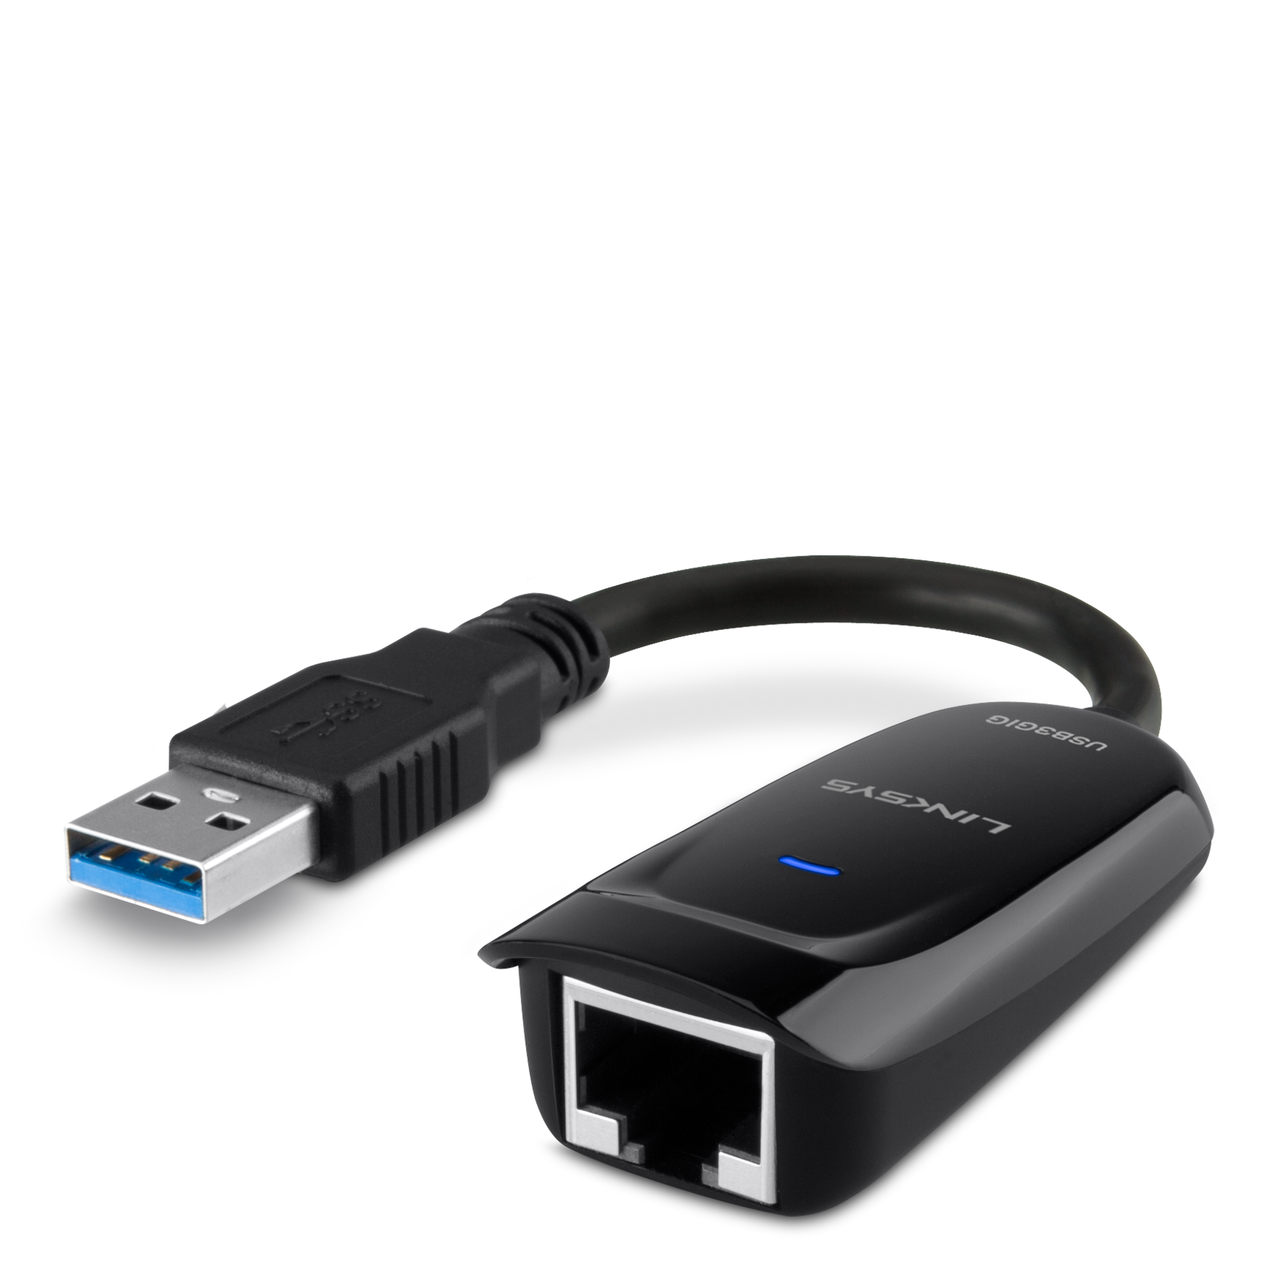 Linksys USB3GIG USB 3.0 Gigabit Ethernet Adapter | Linksys: US